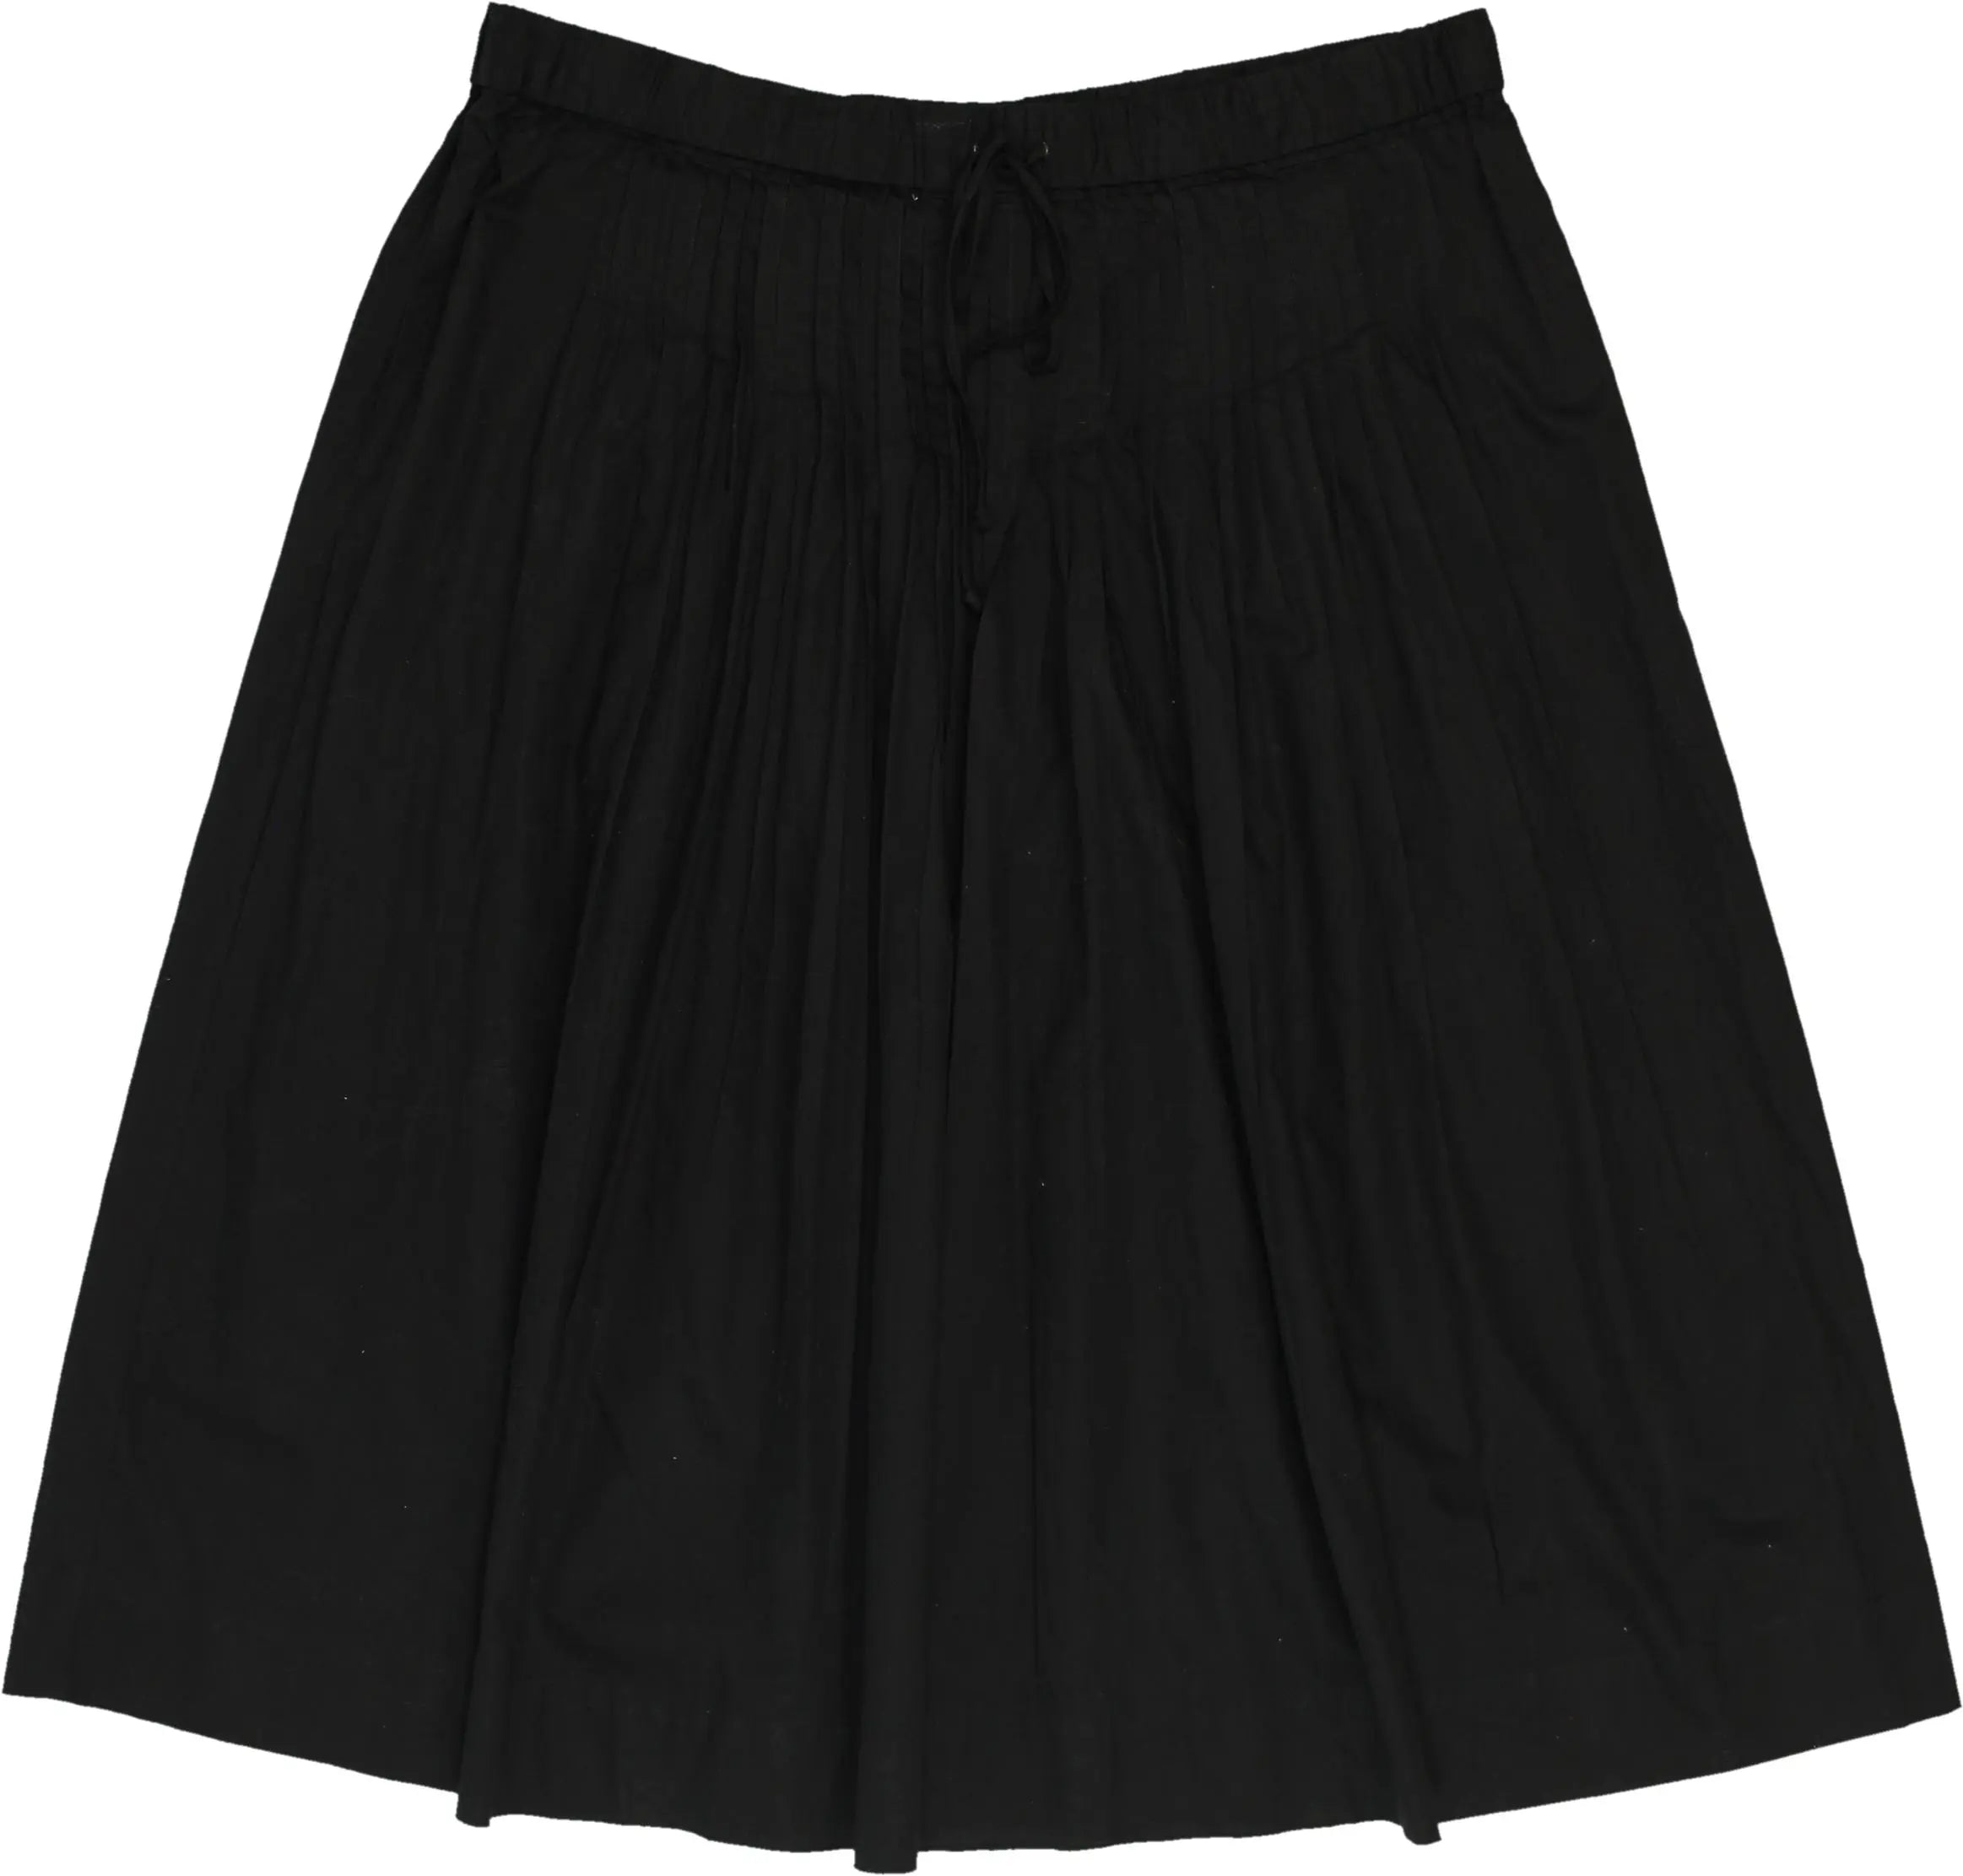 Joe Fresh - Black Pleated Skirt- ThriftTale.com - Vintage and second handclothing